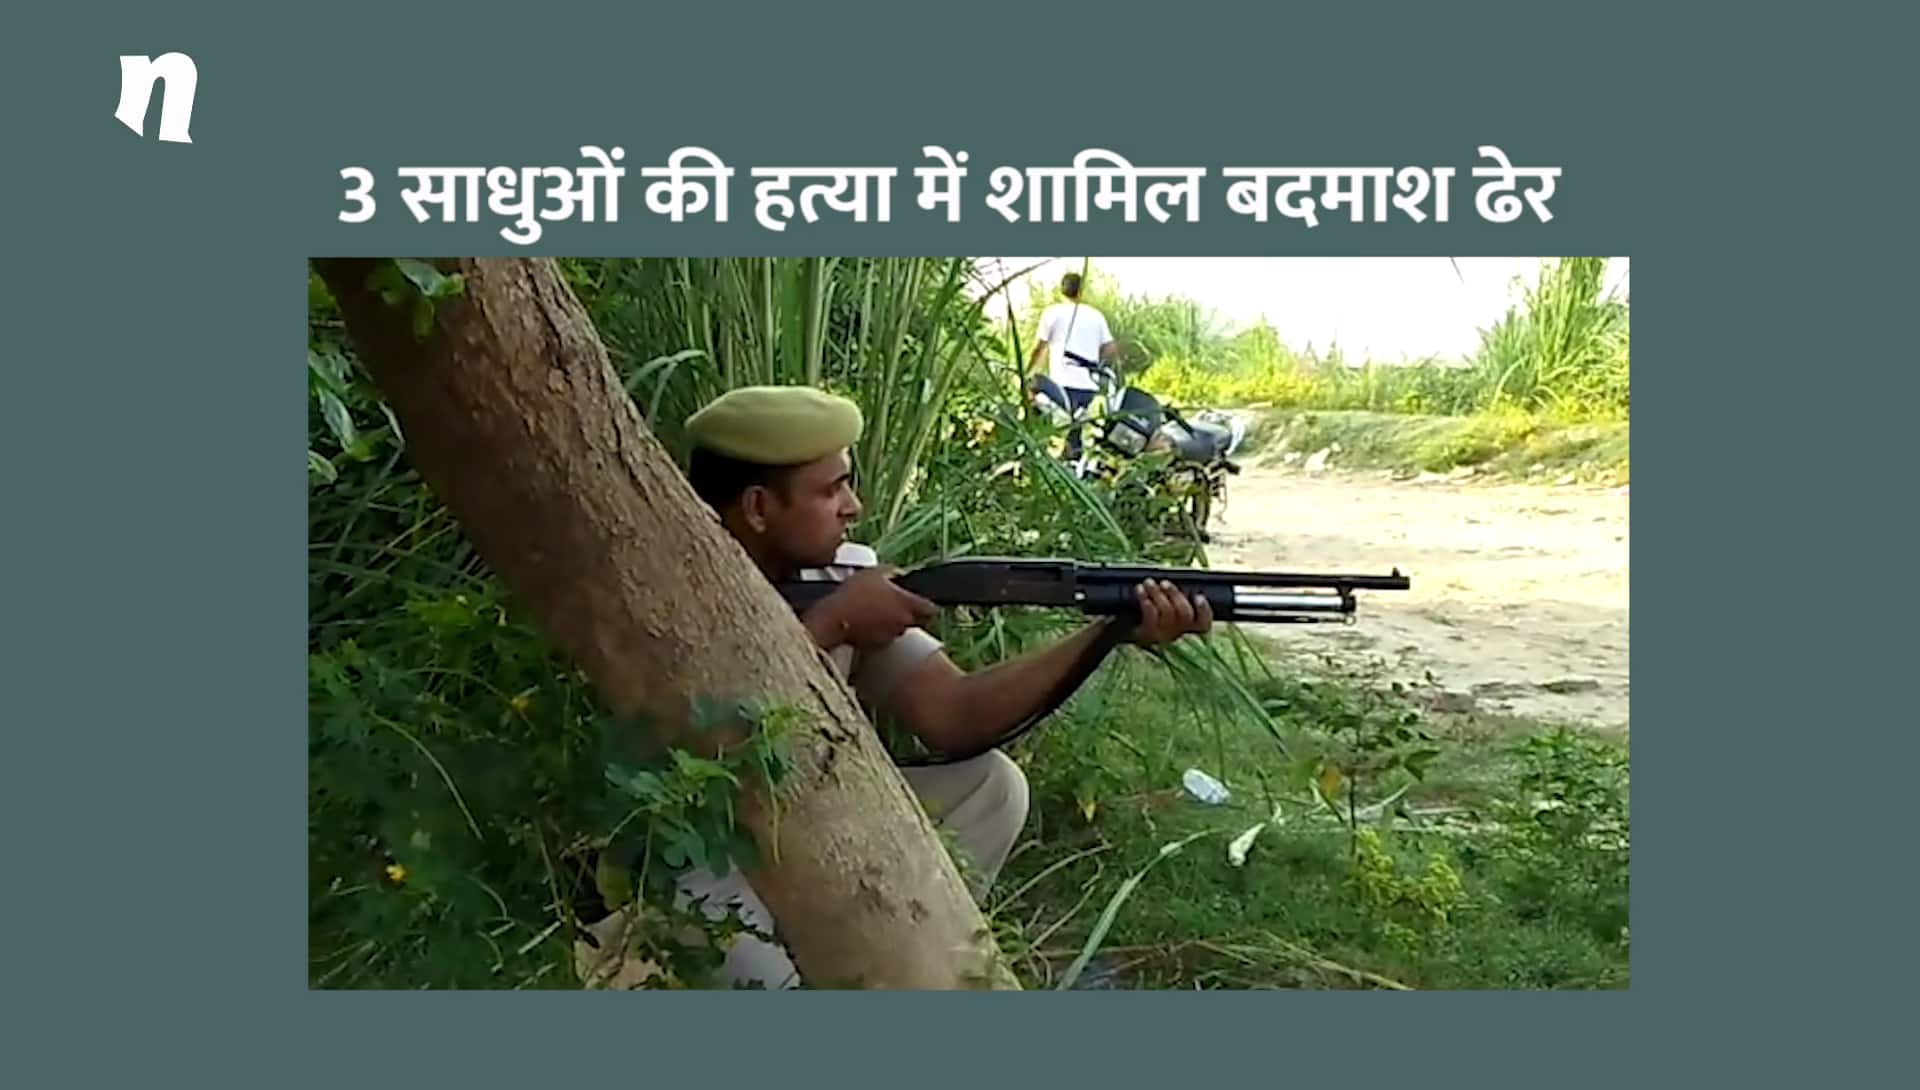 Three sadhus were killed in police encounter in Aligarh